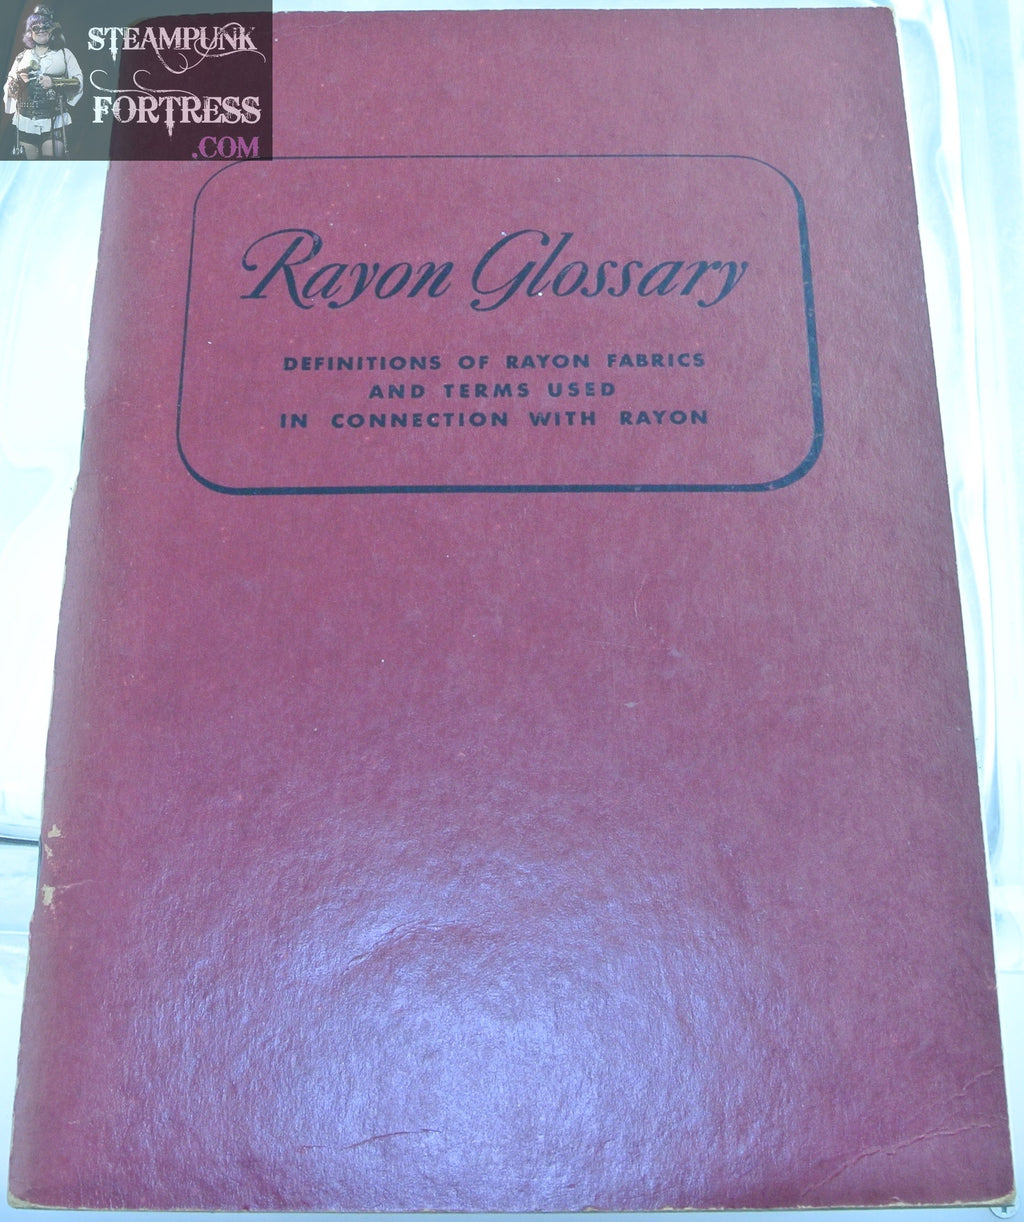 RAYON GLOSSARY AMERICAN VISCOSE CORP BOOK SEWING FABRICS DESIGN FASHION VINTAGE PAPERBACK VERY GOOD